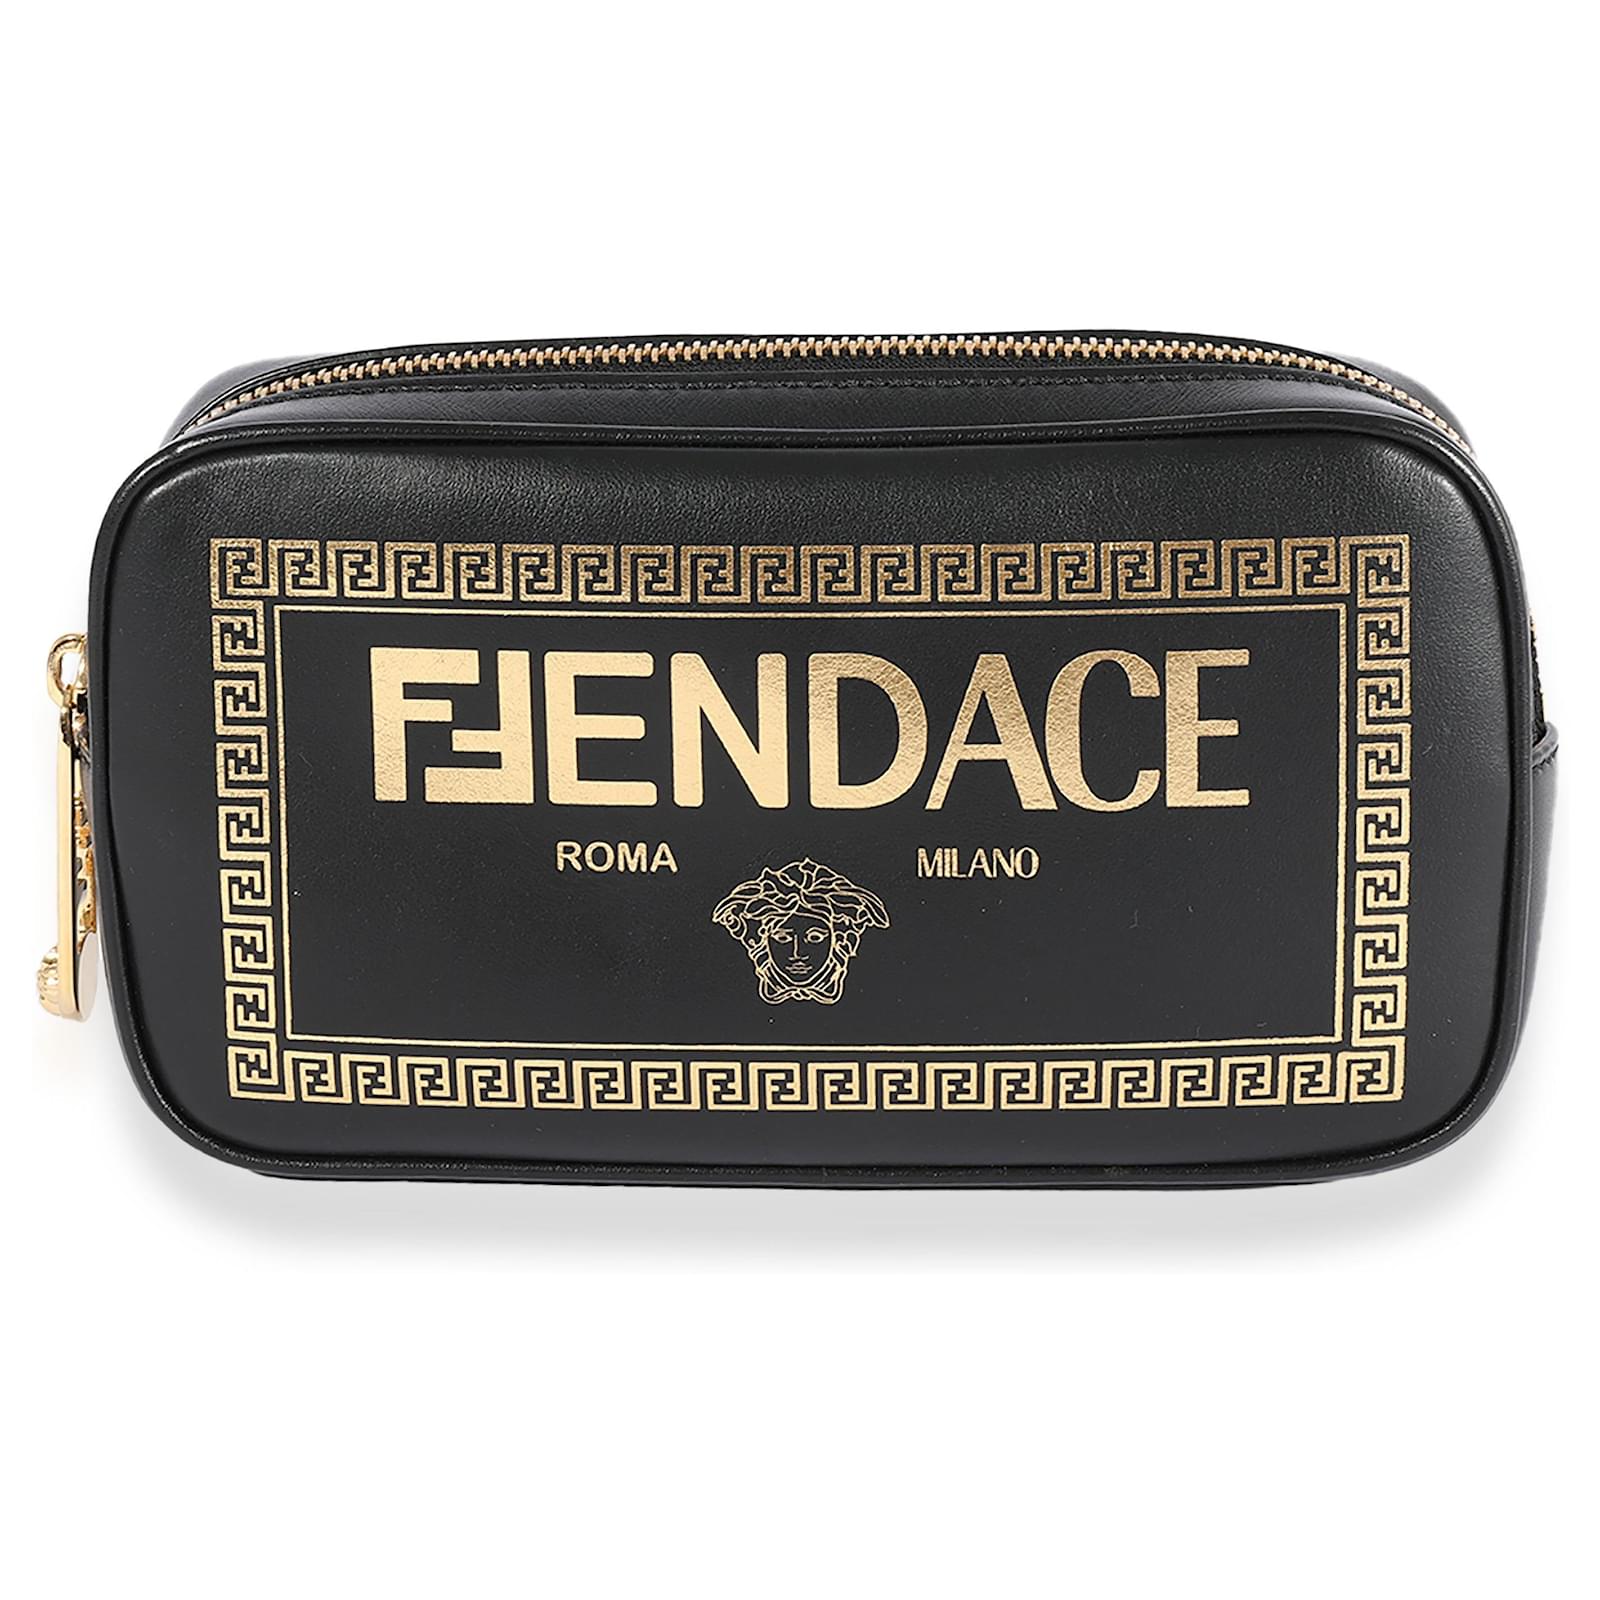 FENDI X VERSACE Fendace Tote - The Purse Ladies